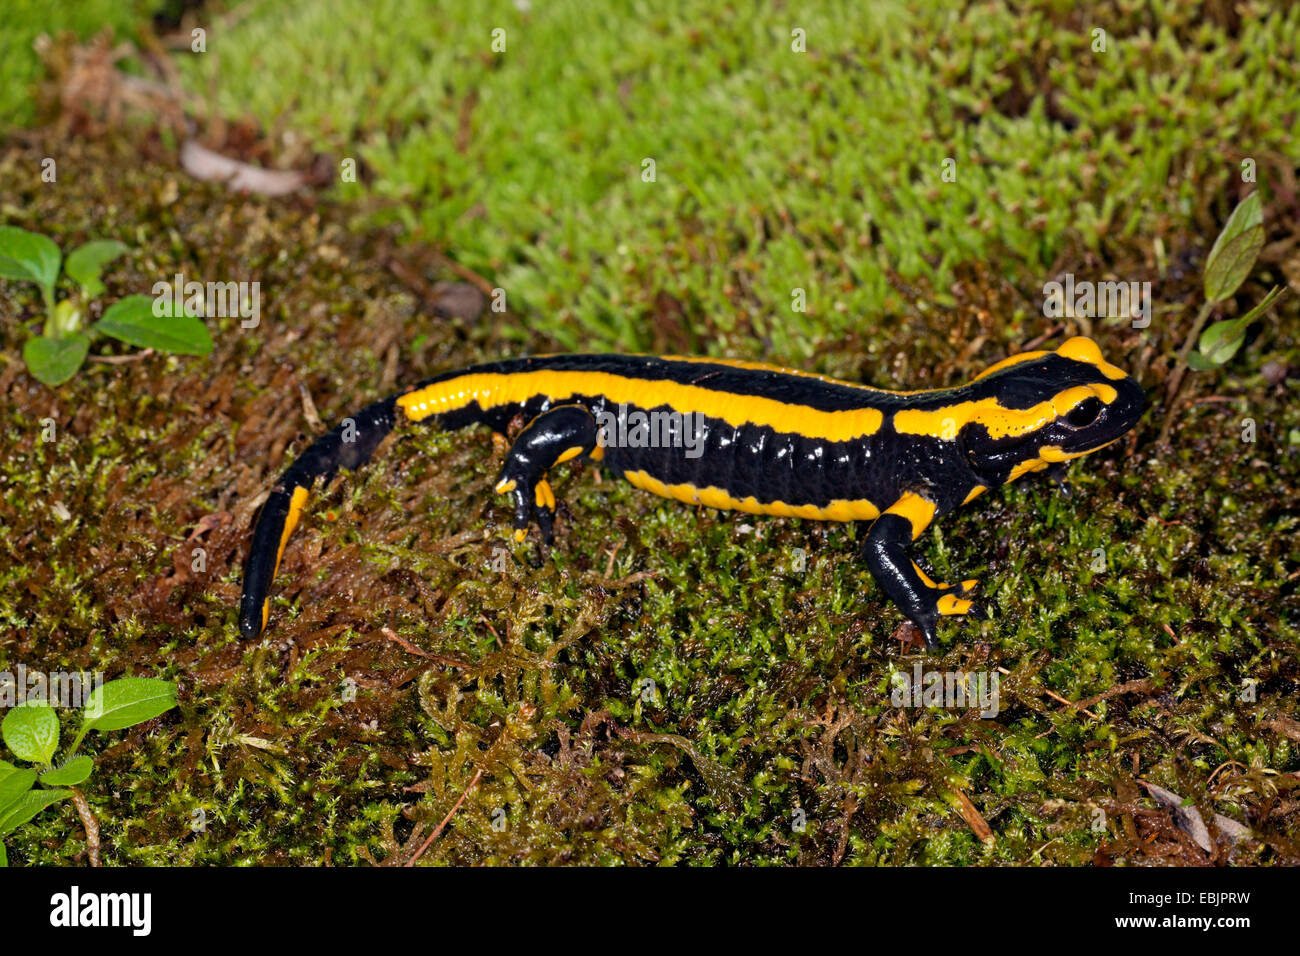 Unione salamandra pezzata (Salamandra salamandra terrestris), in MOSS Foto Stock